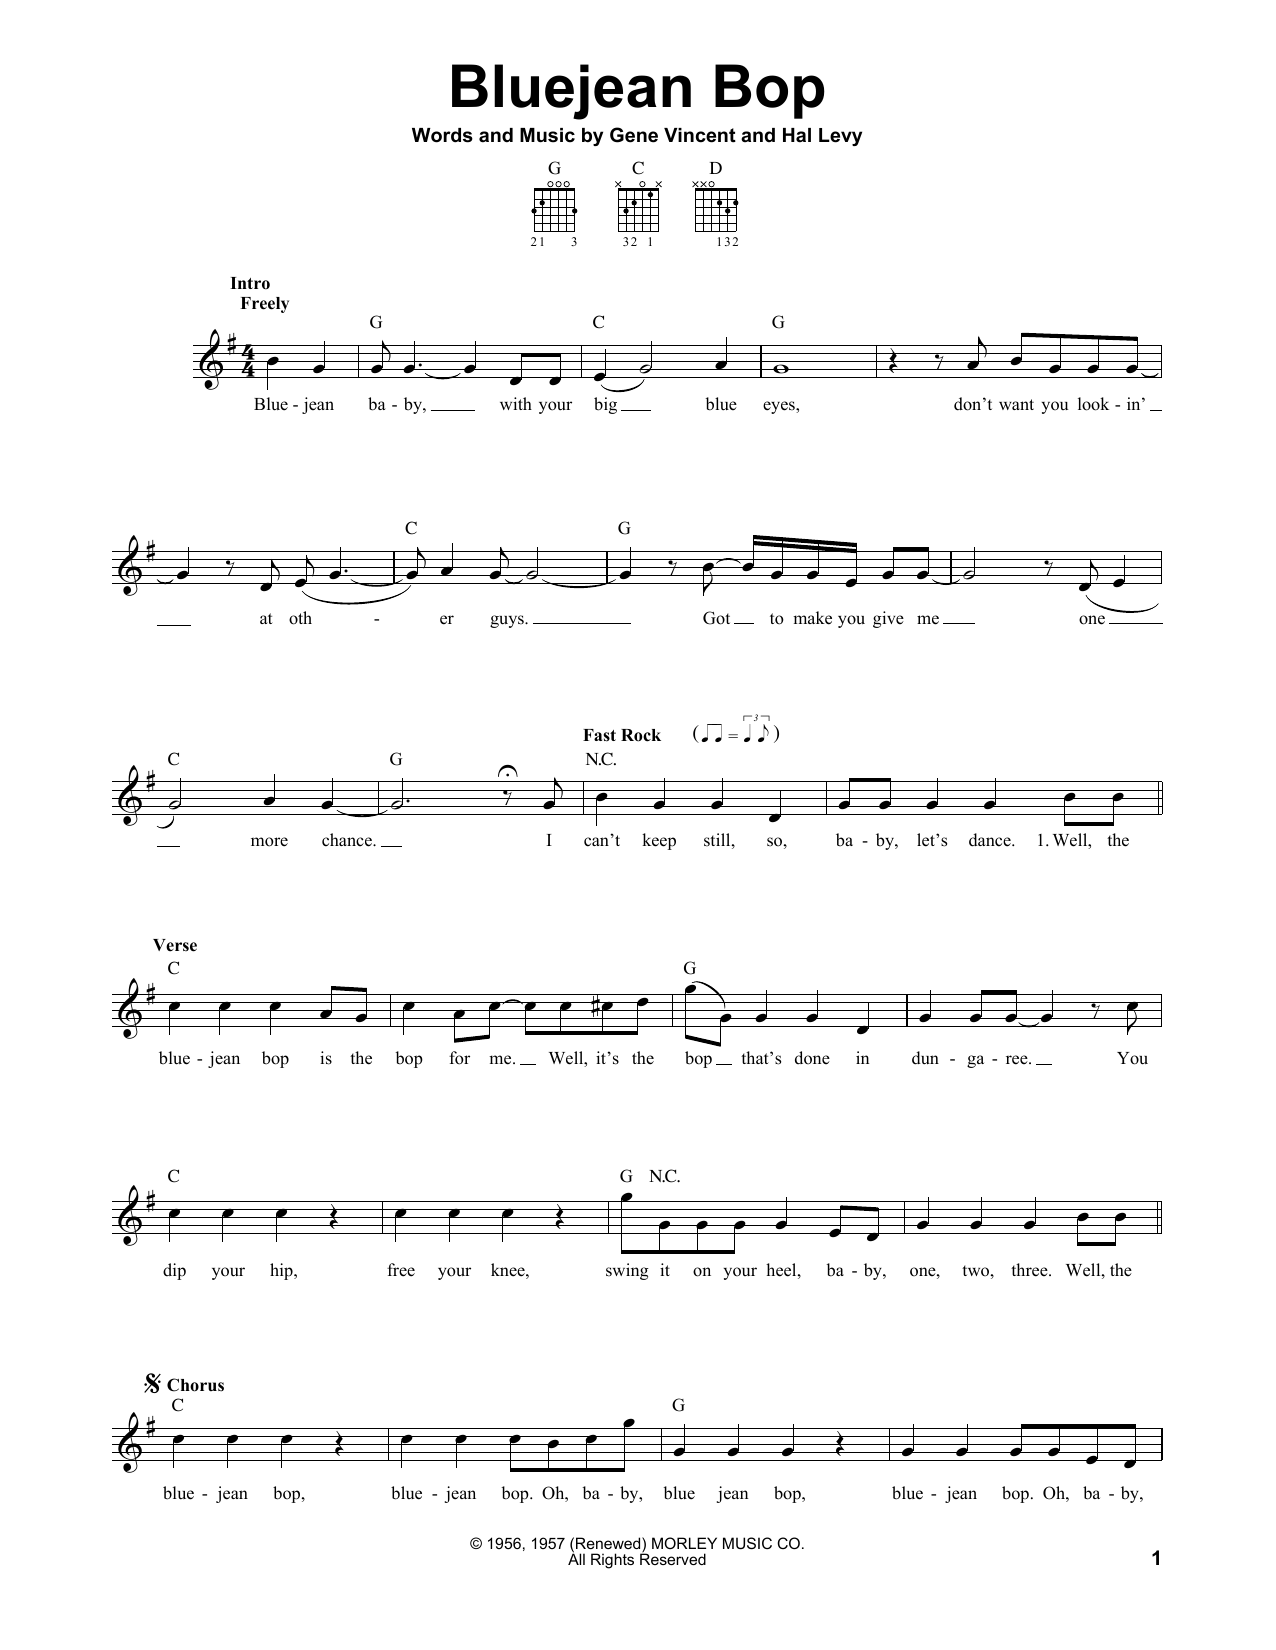 Paul McCartney Bluejean Bop Sheet Music Notes & Chords for Easy Guitar - Download or Print PDF